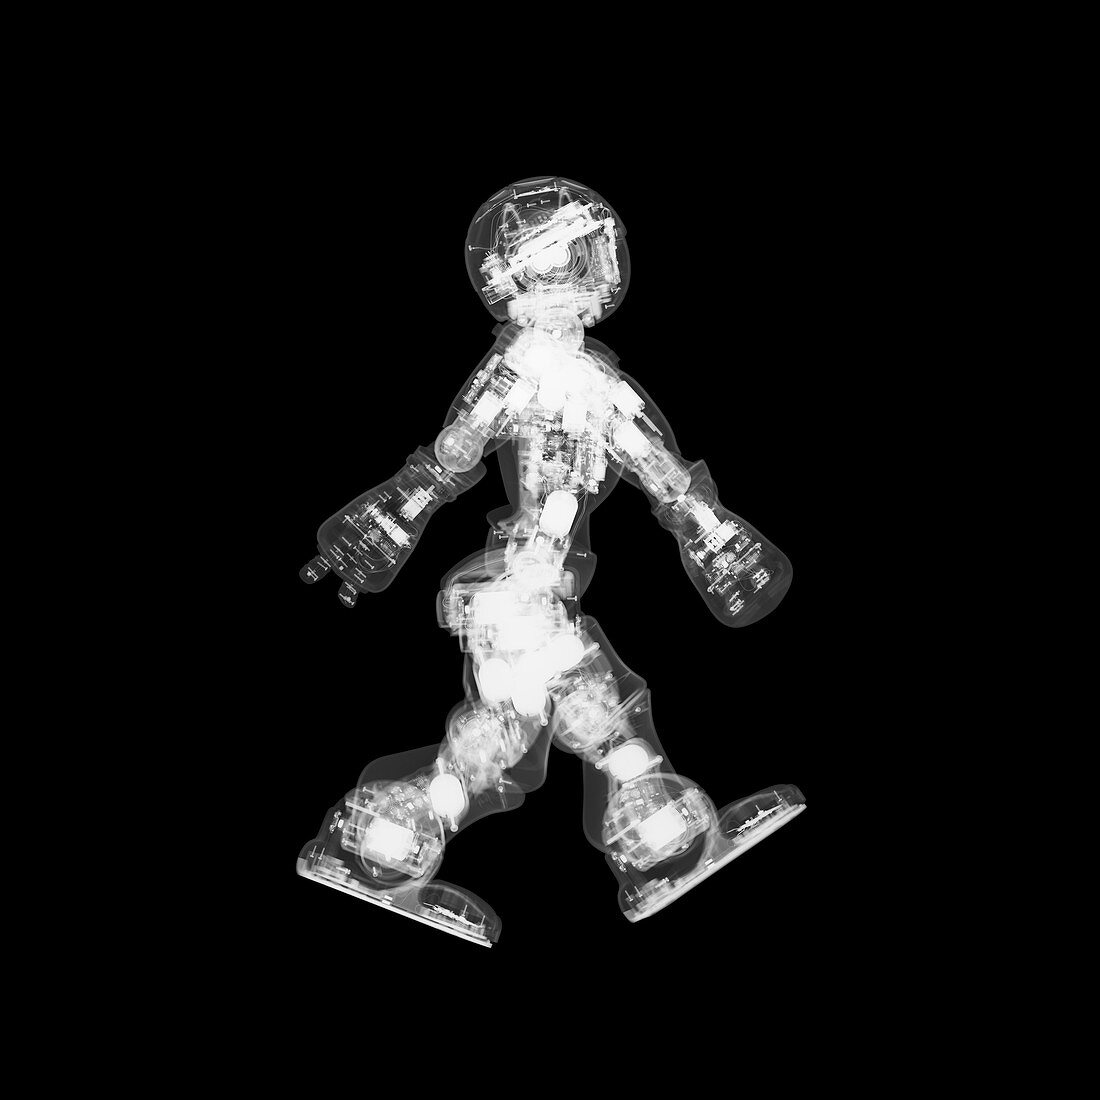 Walking robot, X-ray